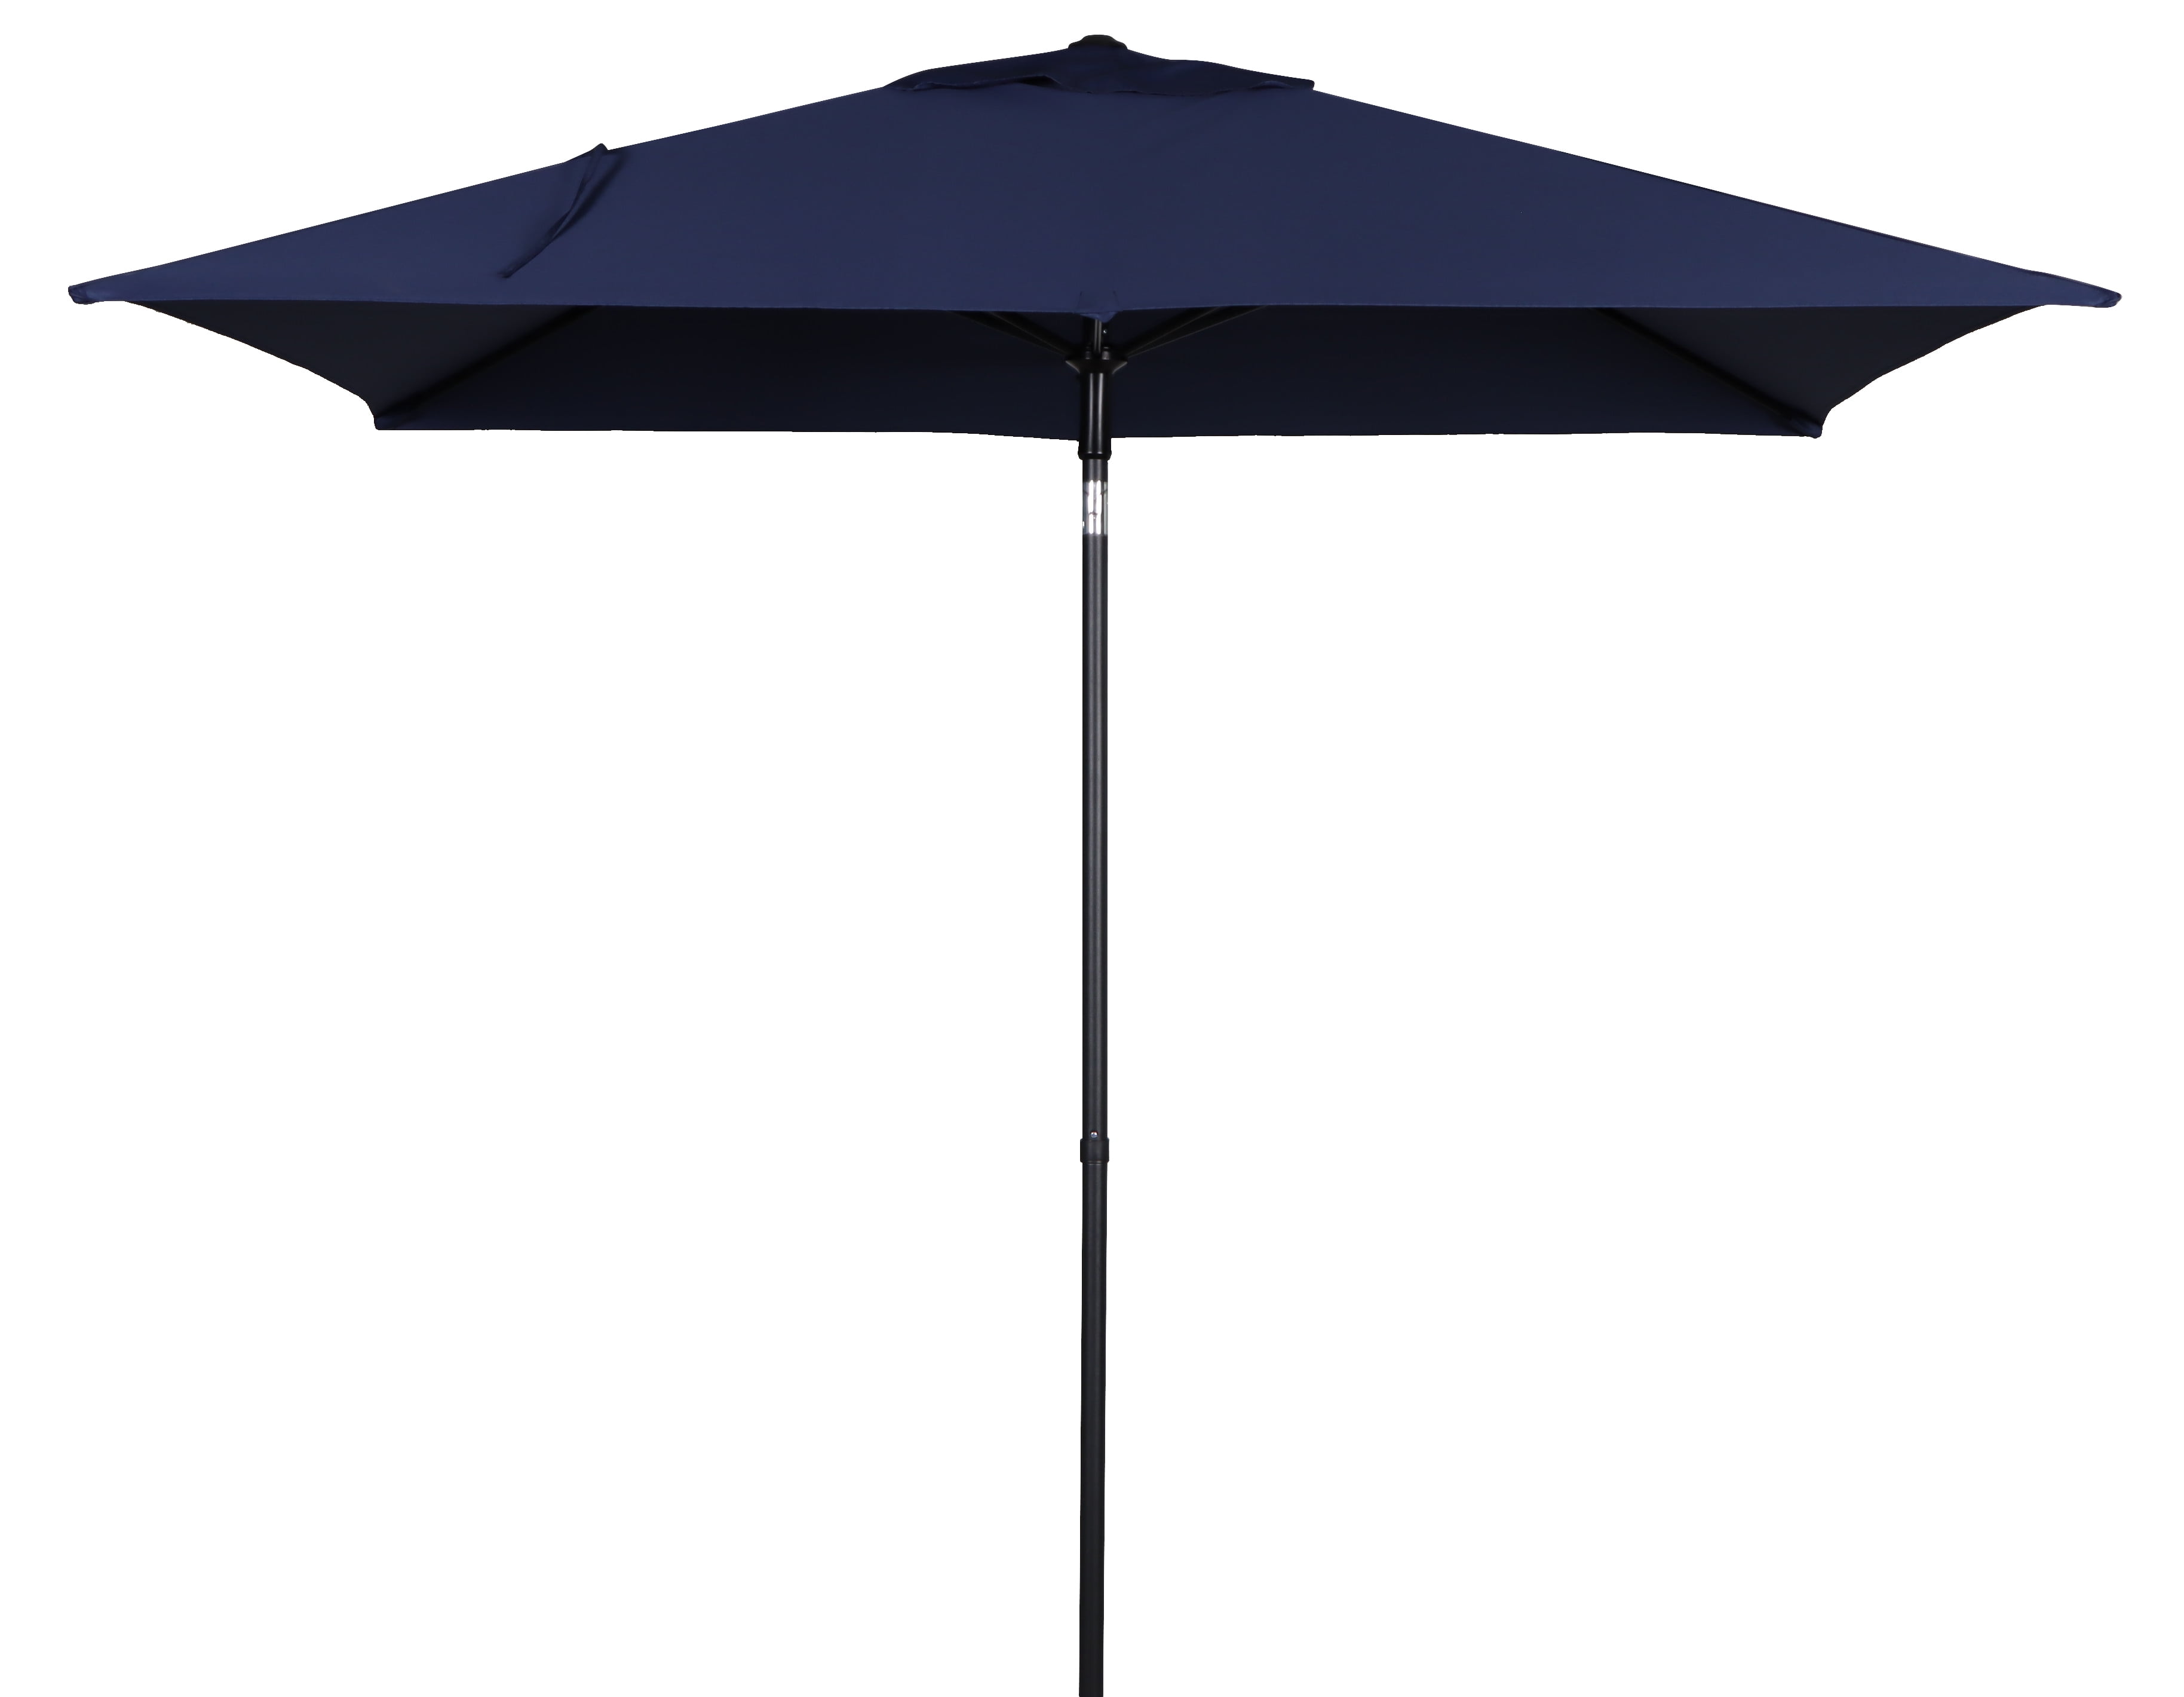 Mainstays Outdoor 6 x 7.5ft Navy Rectangular Outdoor Market Patio Umbrella with Push-up Function